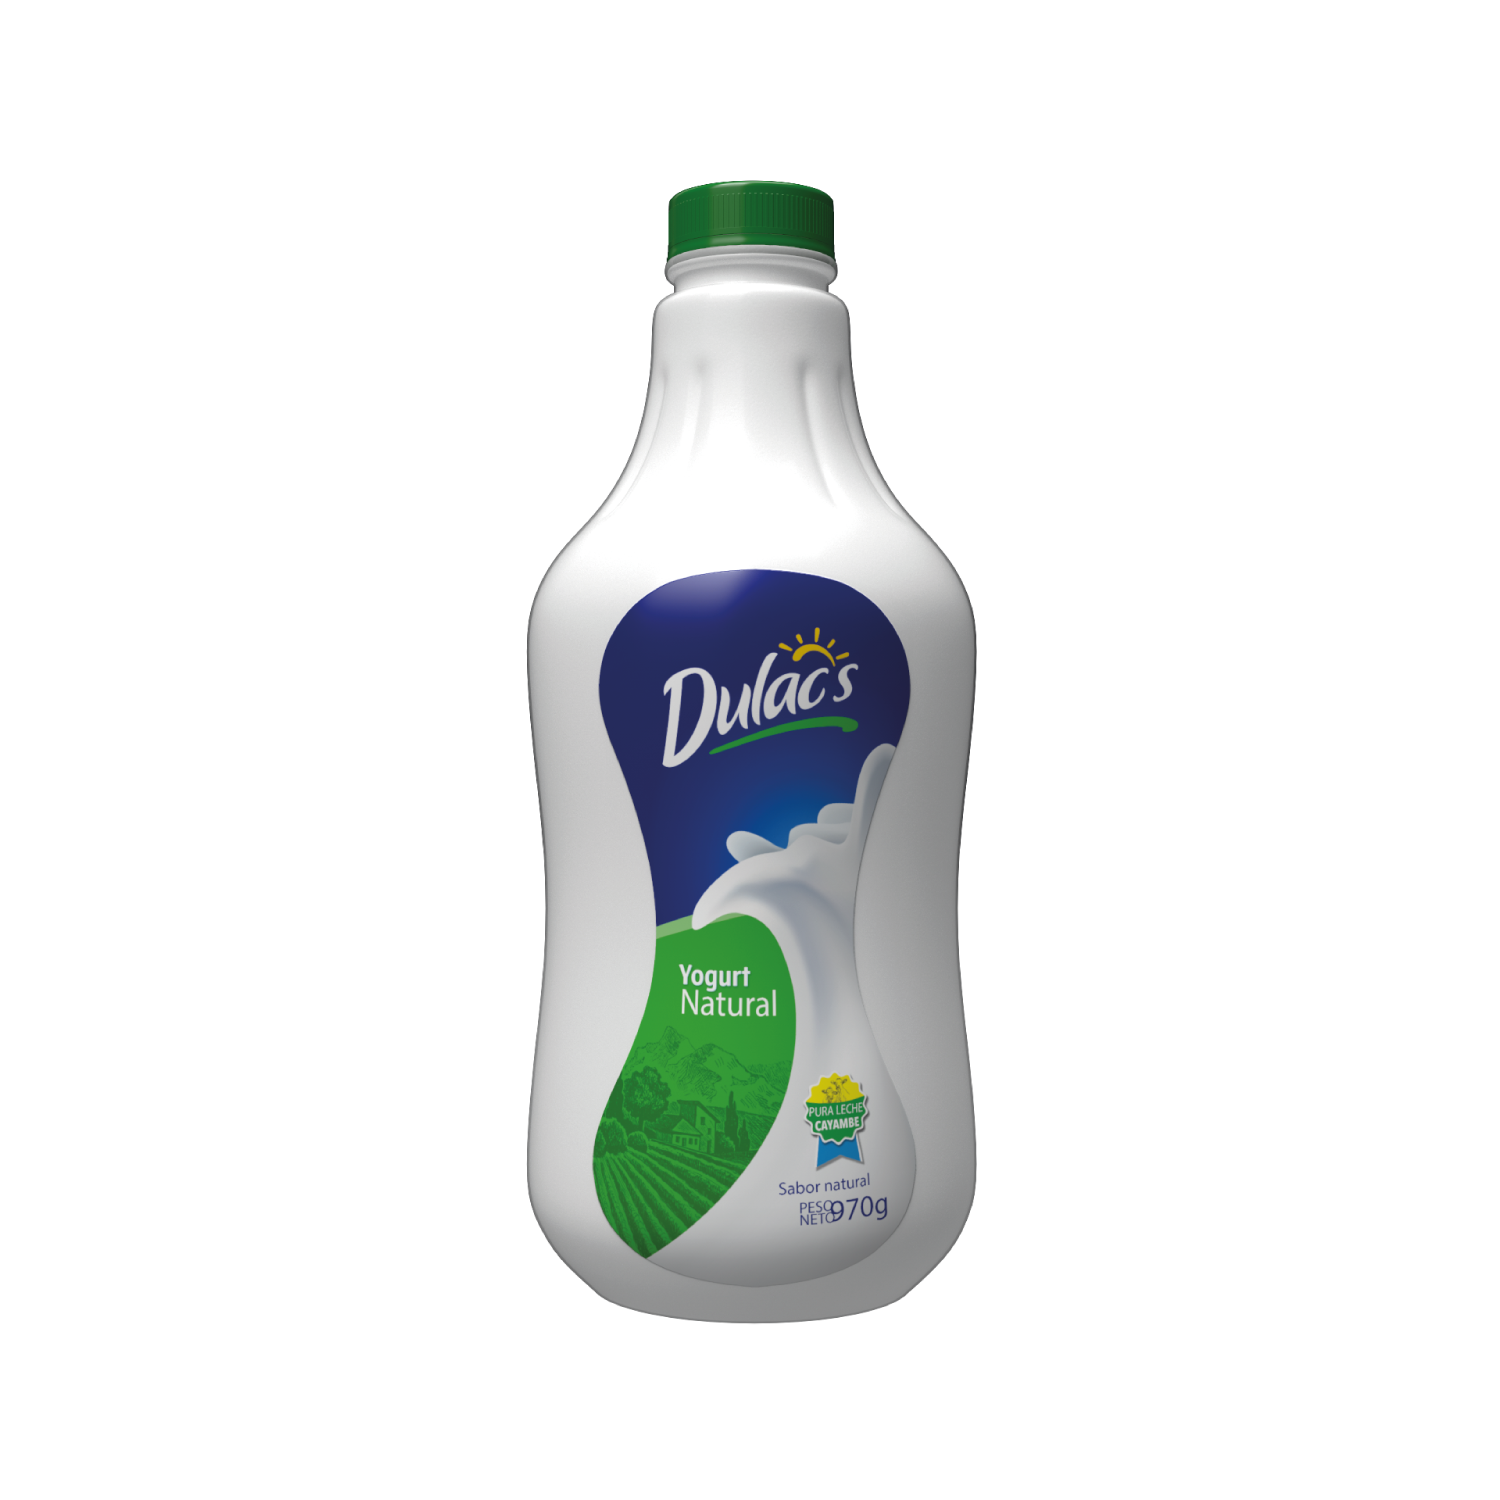 Dulacs Yogurt Natural 1750G